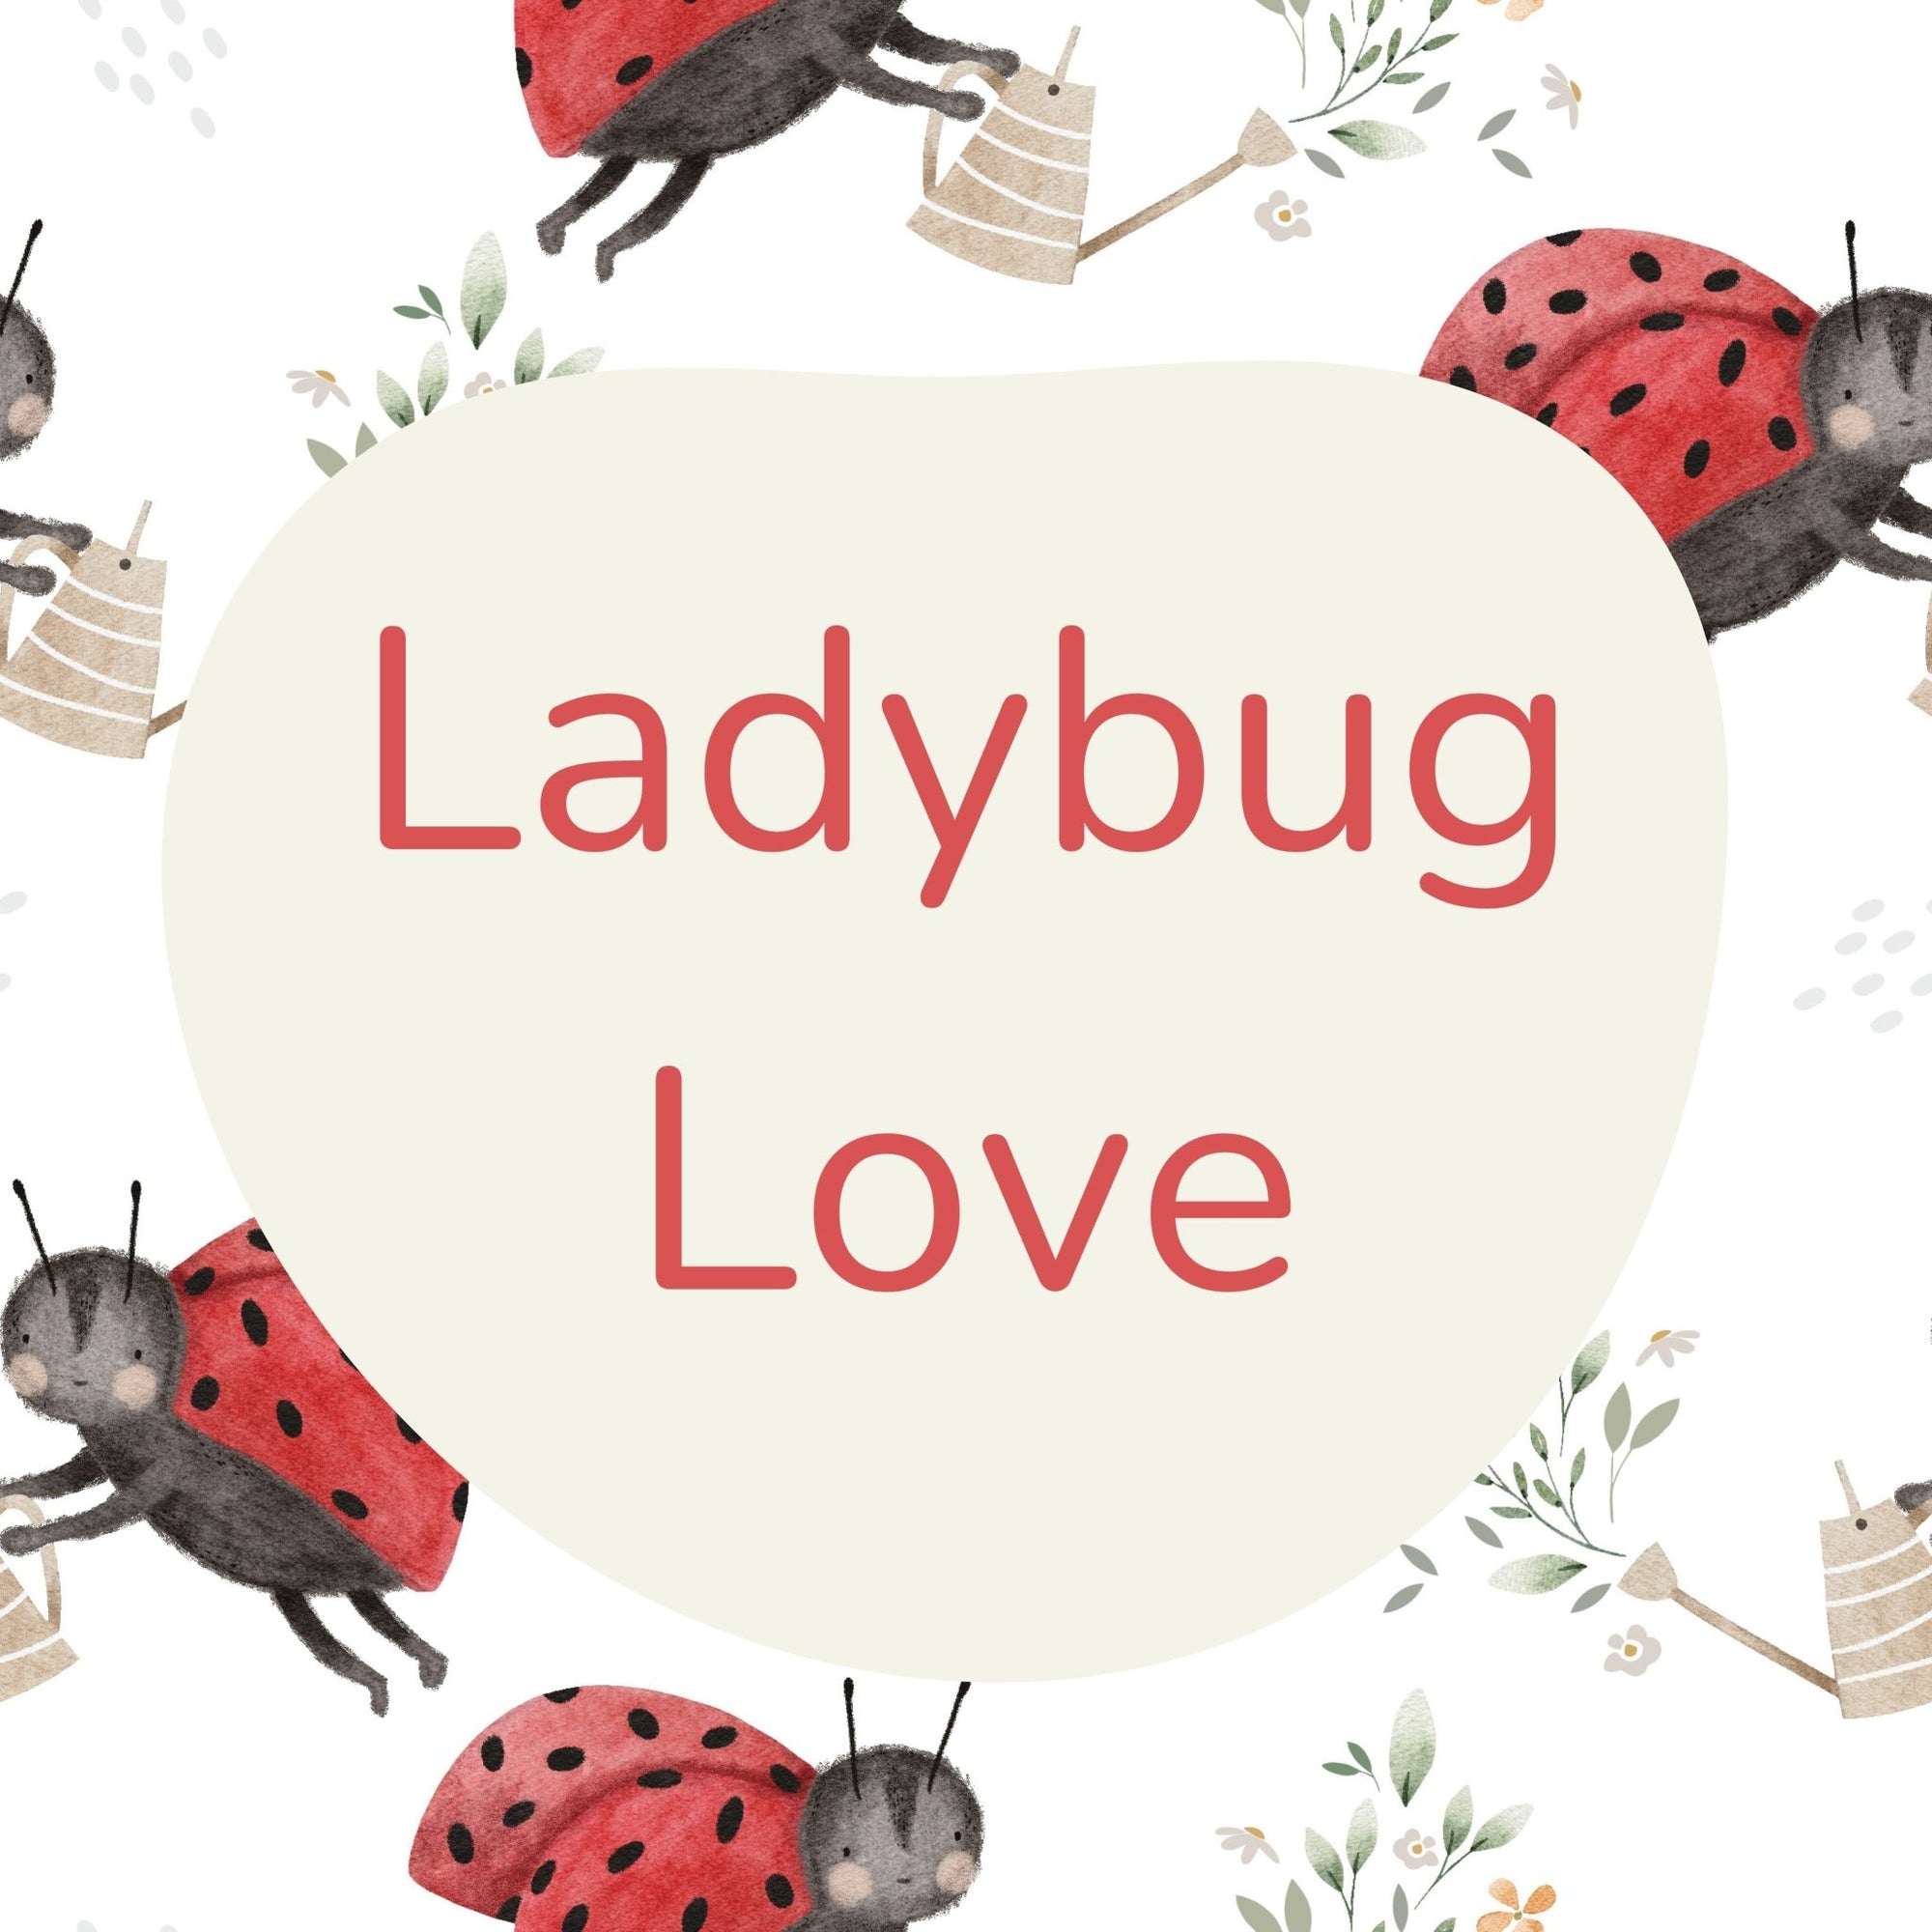 RB Ladybug Love - ClayBearOfficial